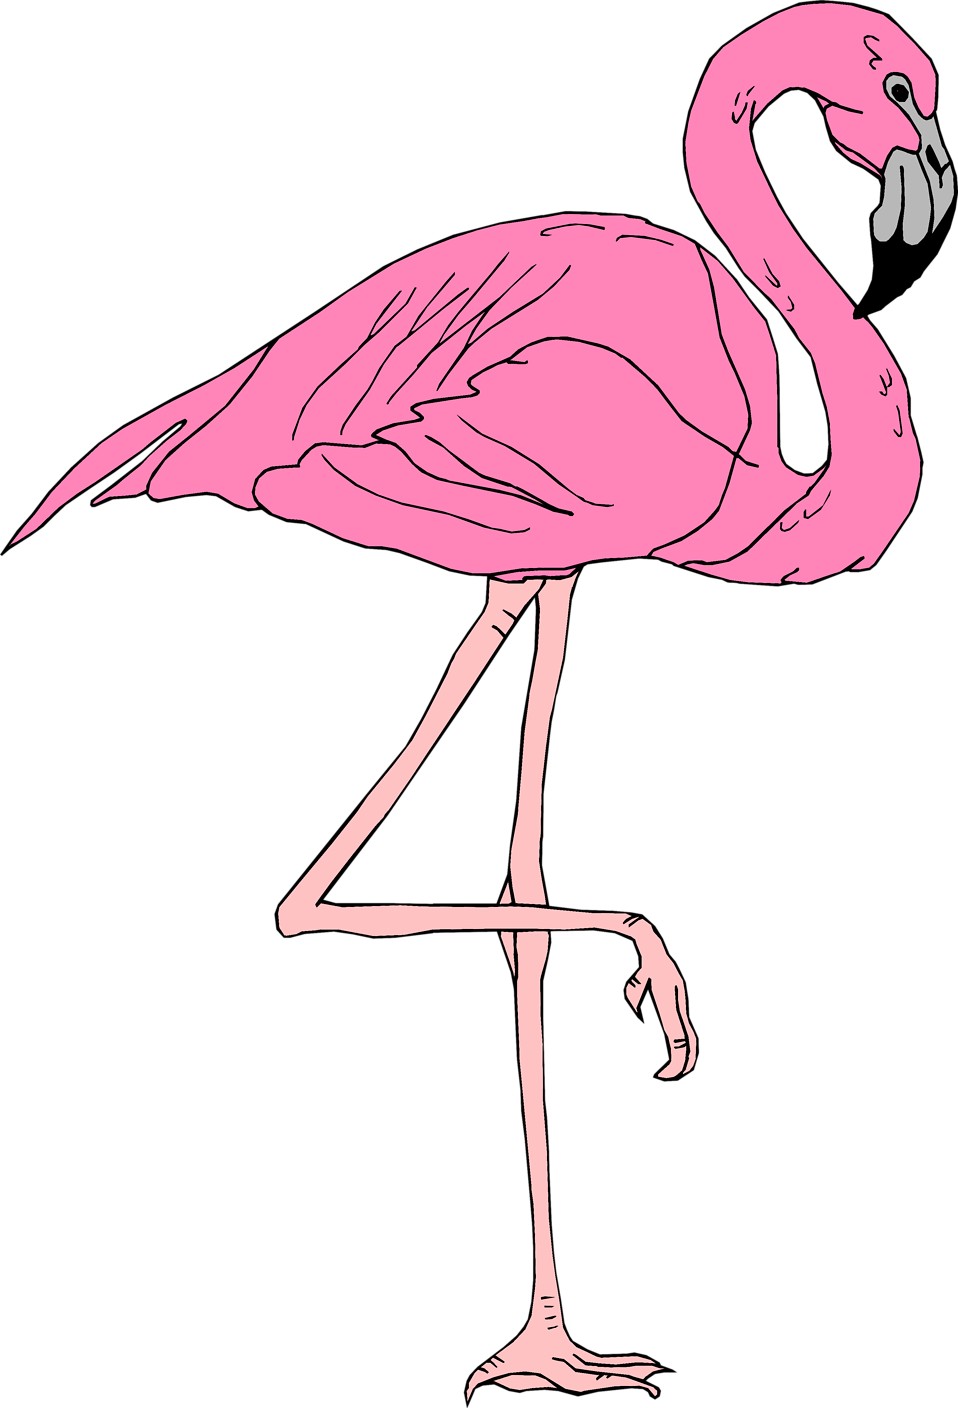 Flamingo   Free Stock Photo   Illustration Of A Pink Flamingo     3399